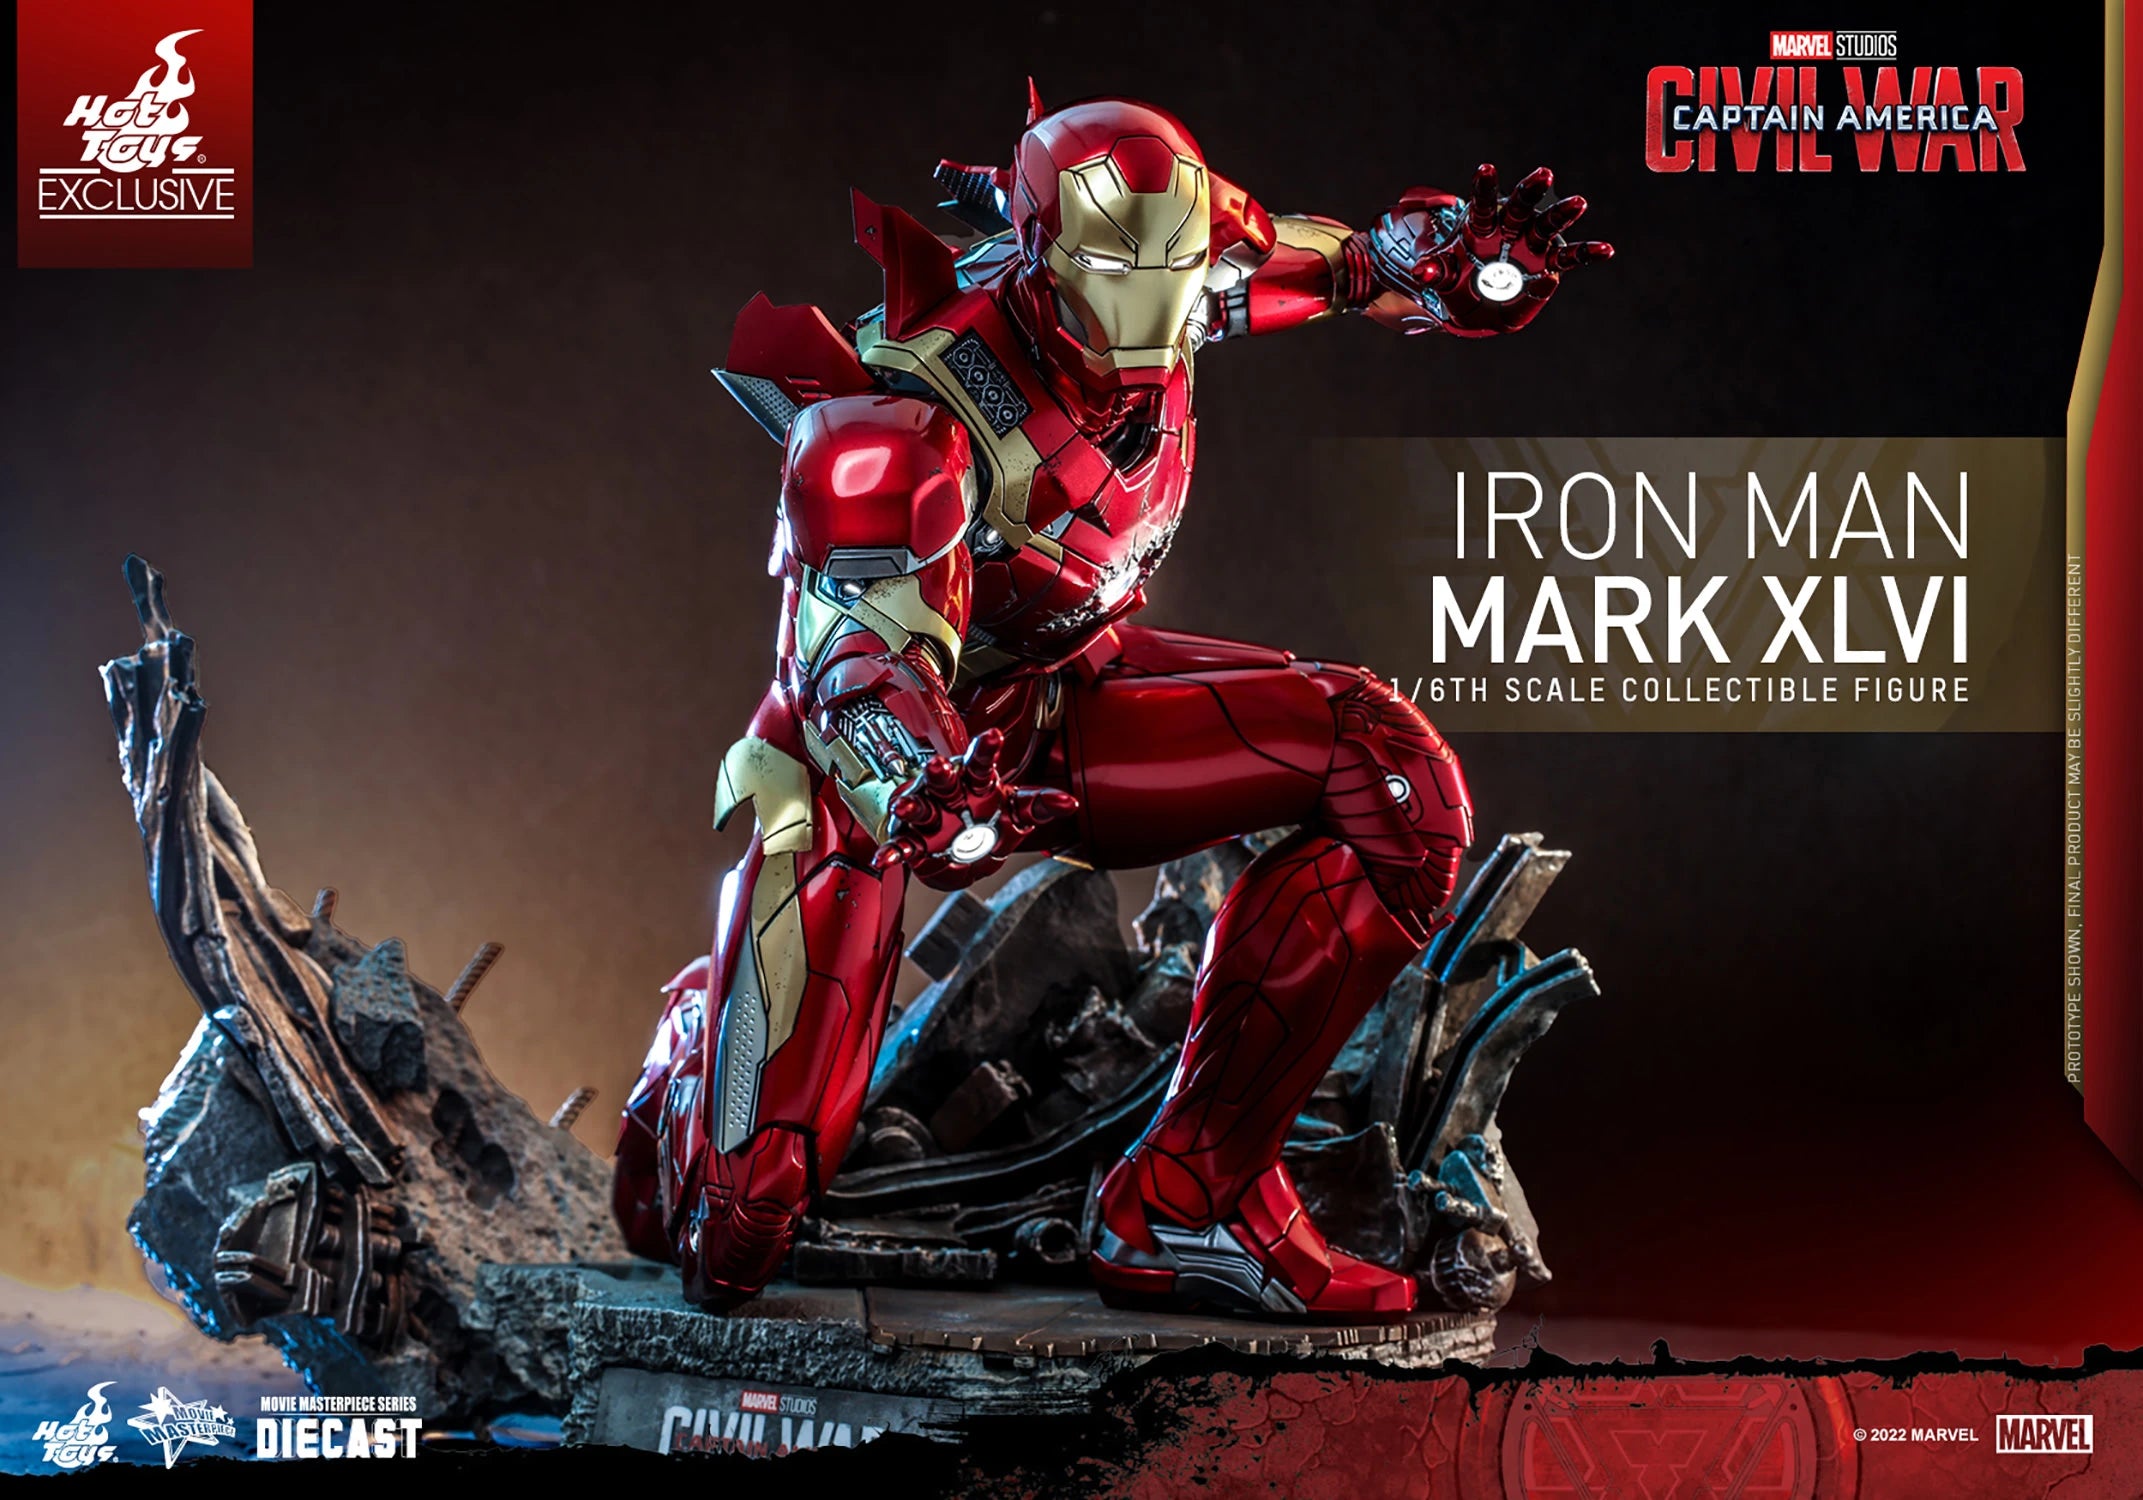 IRON MAN MARK XLVI Sixth Scale Figure By Hot Toys